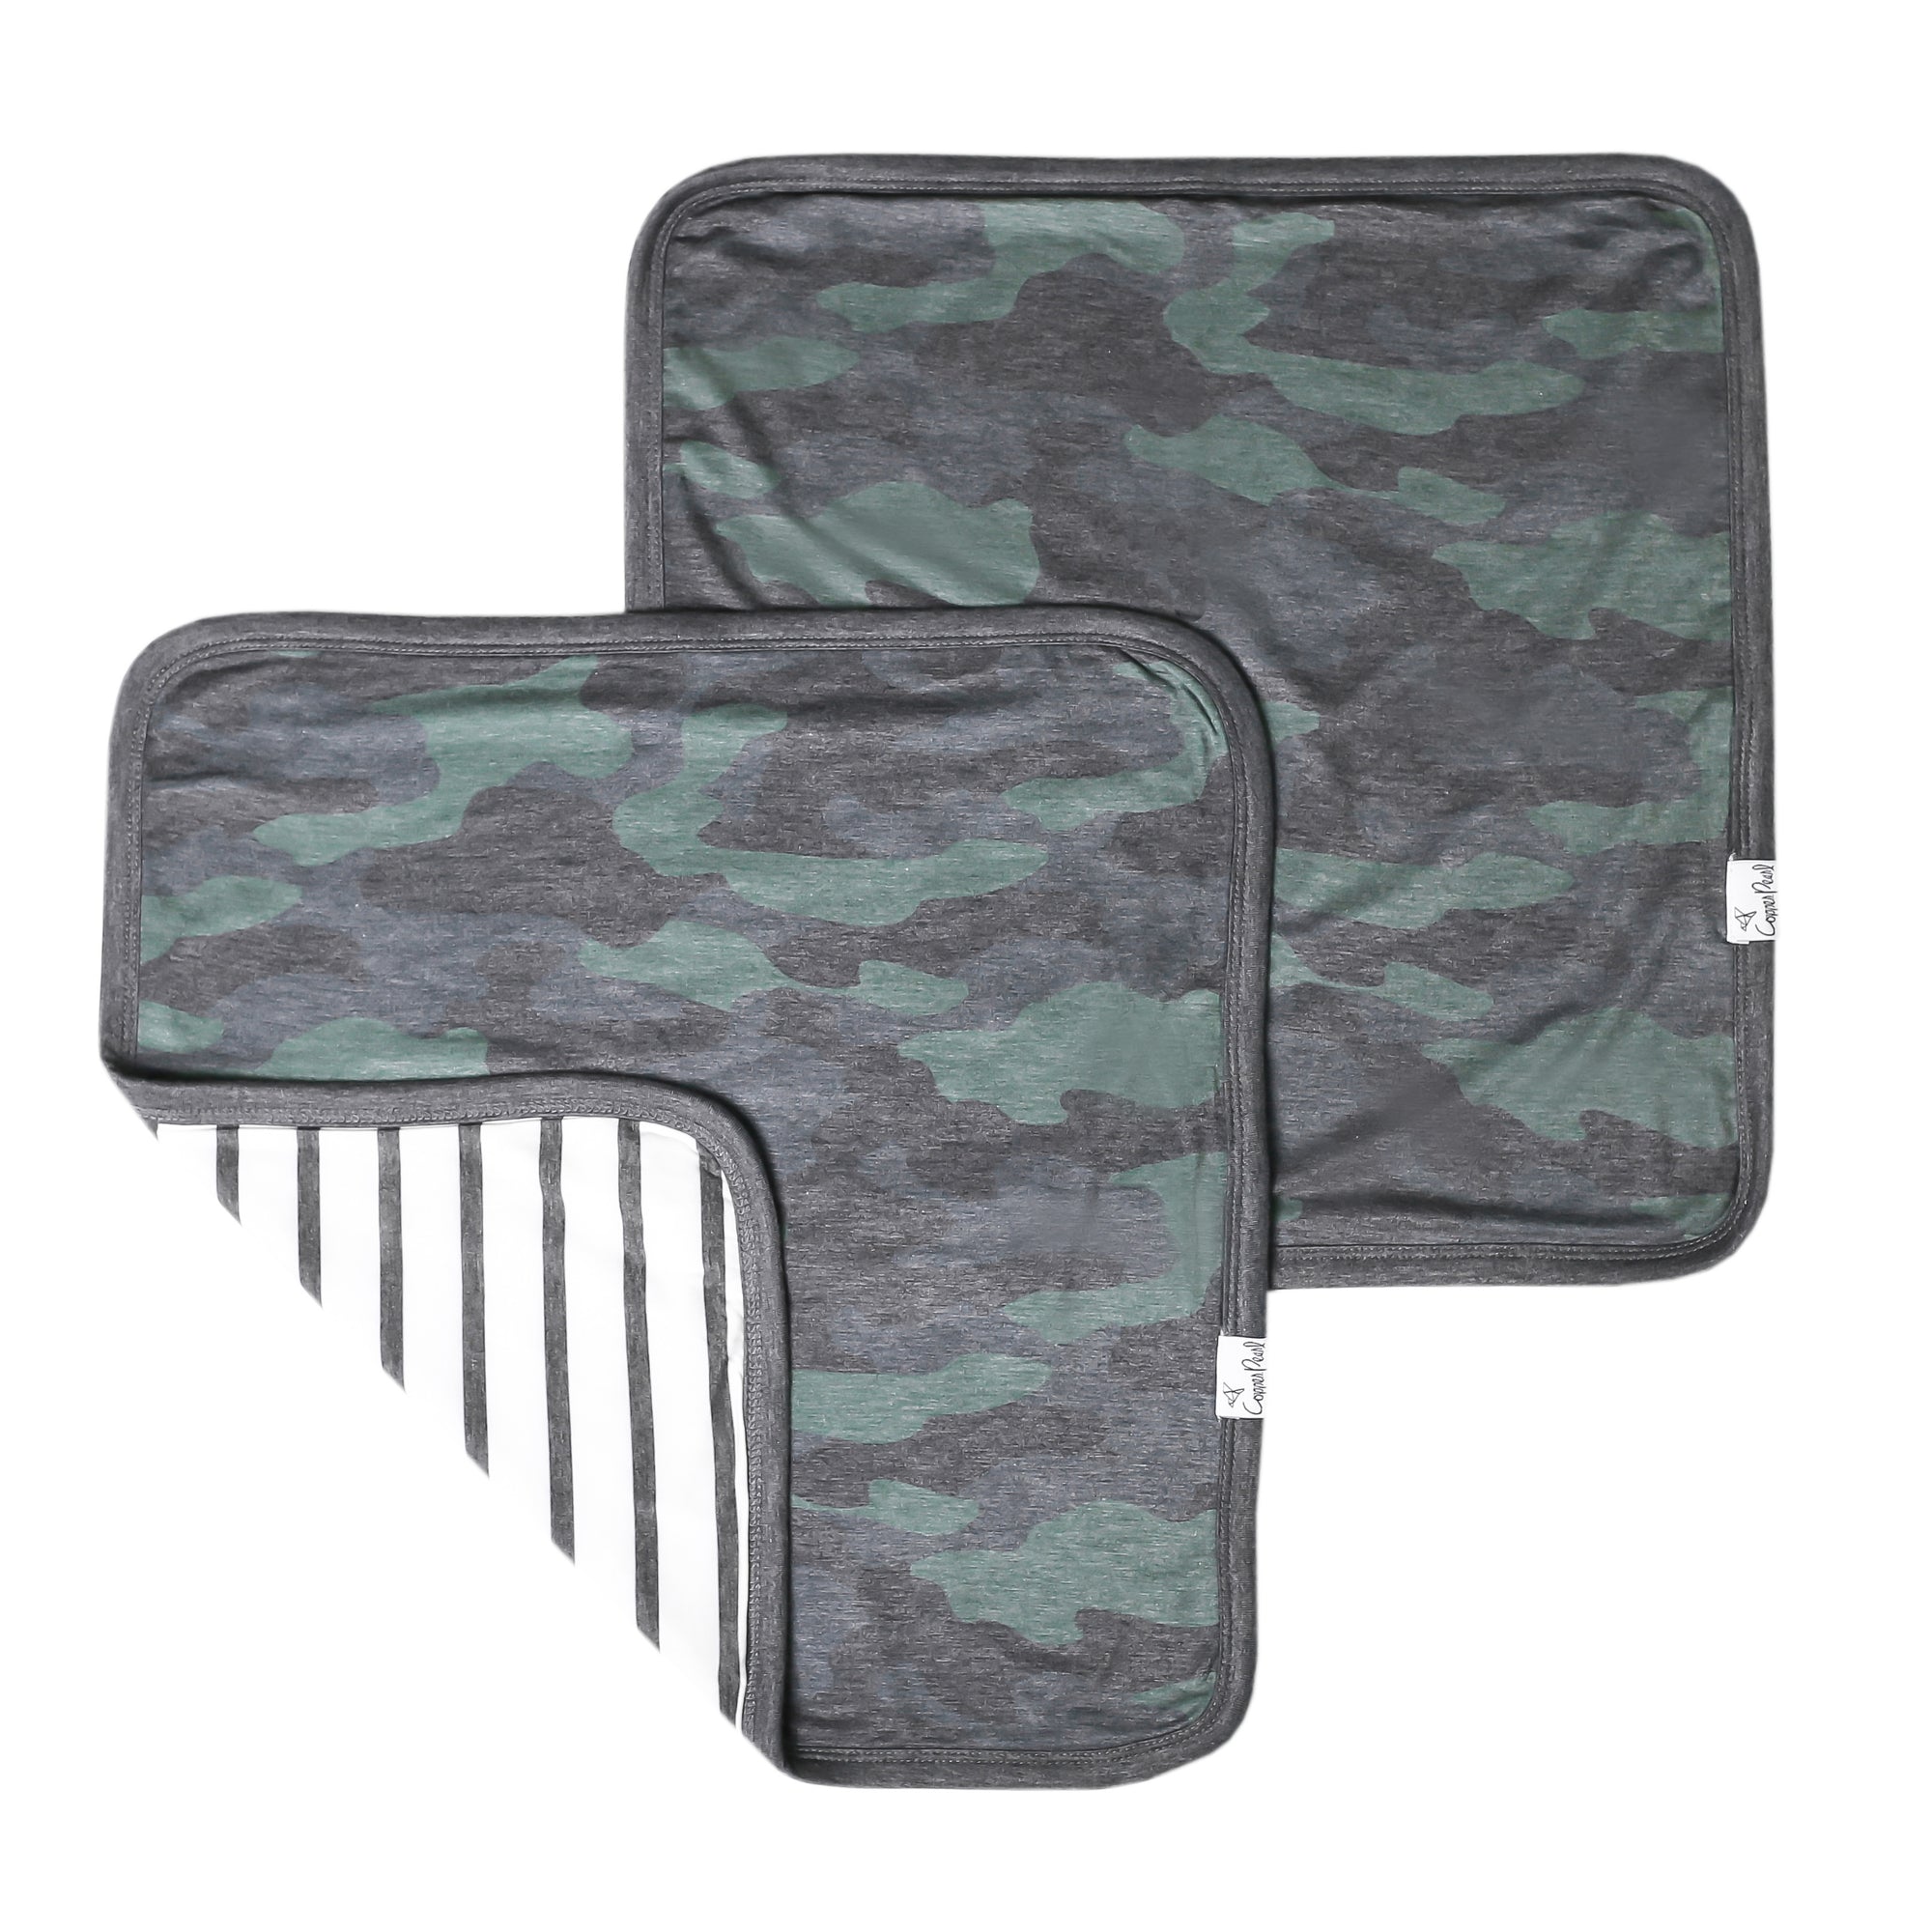 Three-Layer Security Blanket Set - Hunter